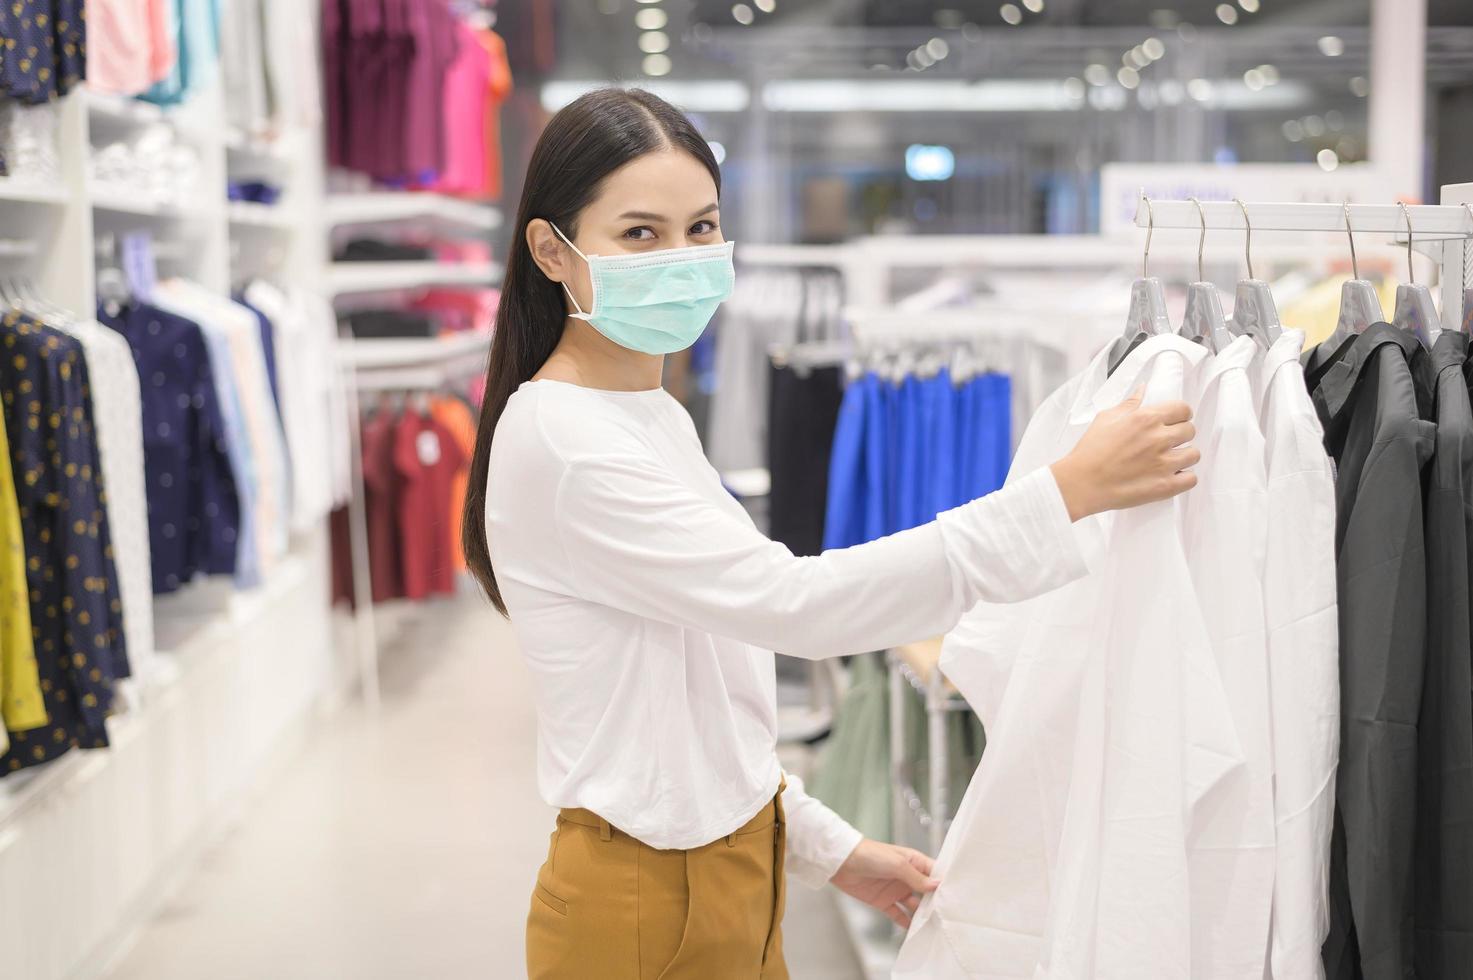 mulher usando máscara protetora fazendo compras sob pandemia covid-19 em shopping center, protocolo de distanciamento social, novo conceito normal. foto